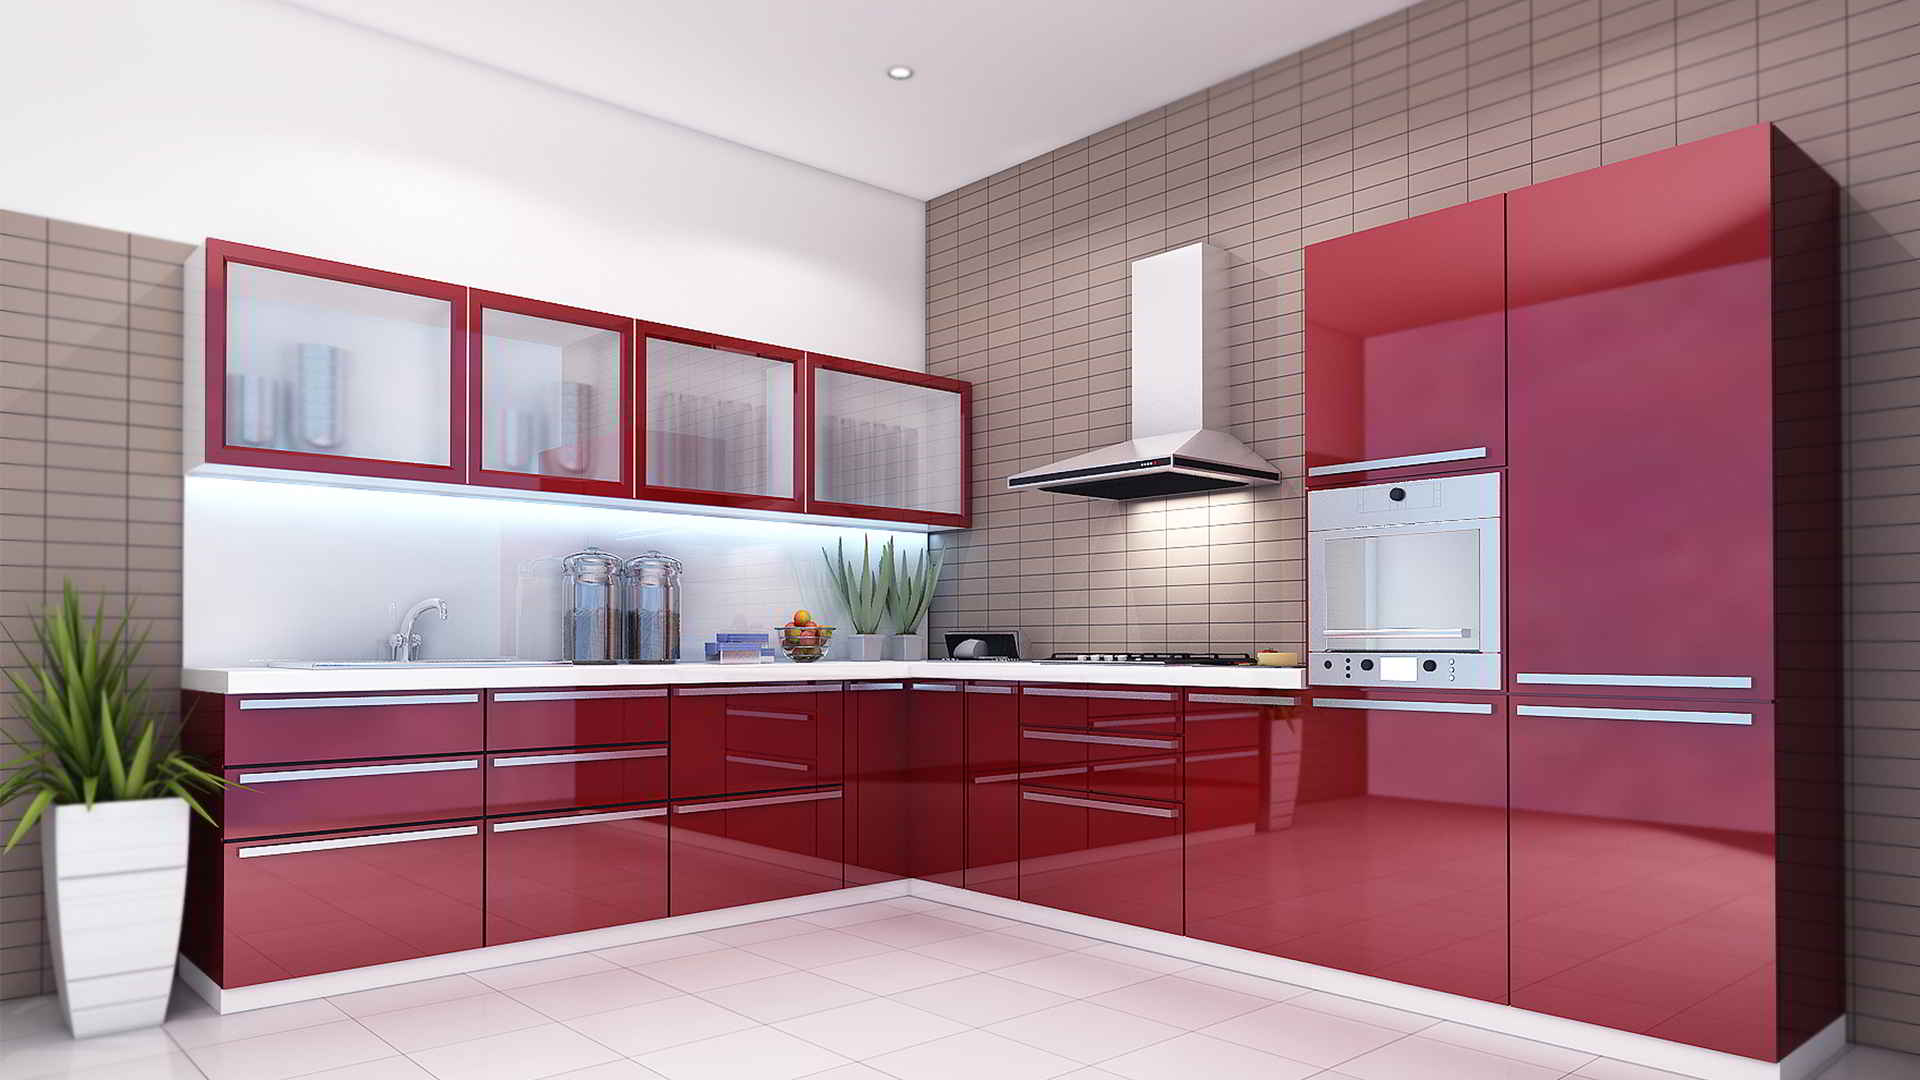 wallpaper design for kitchen cabinet